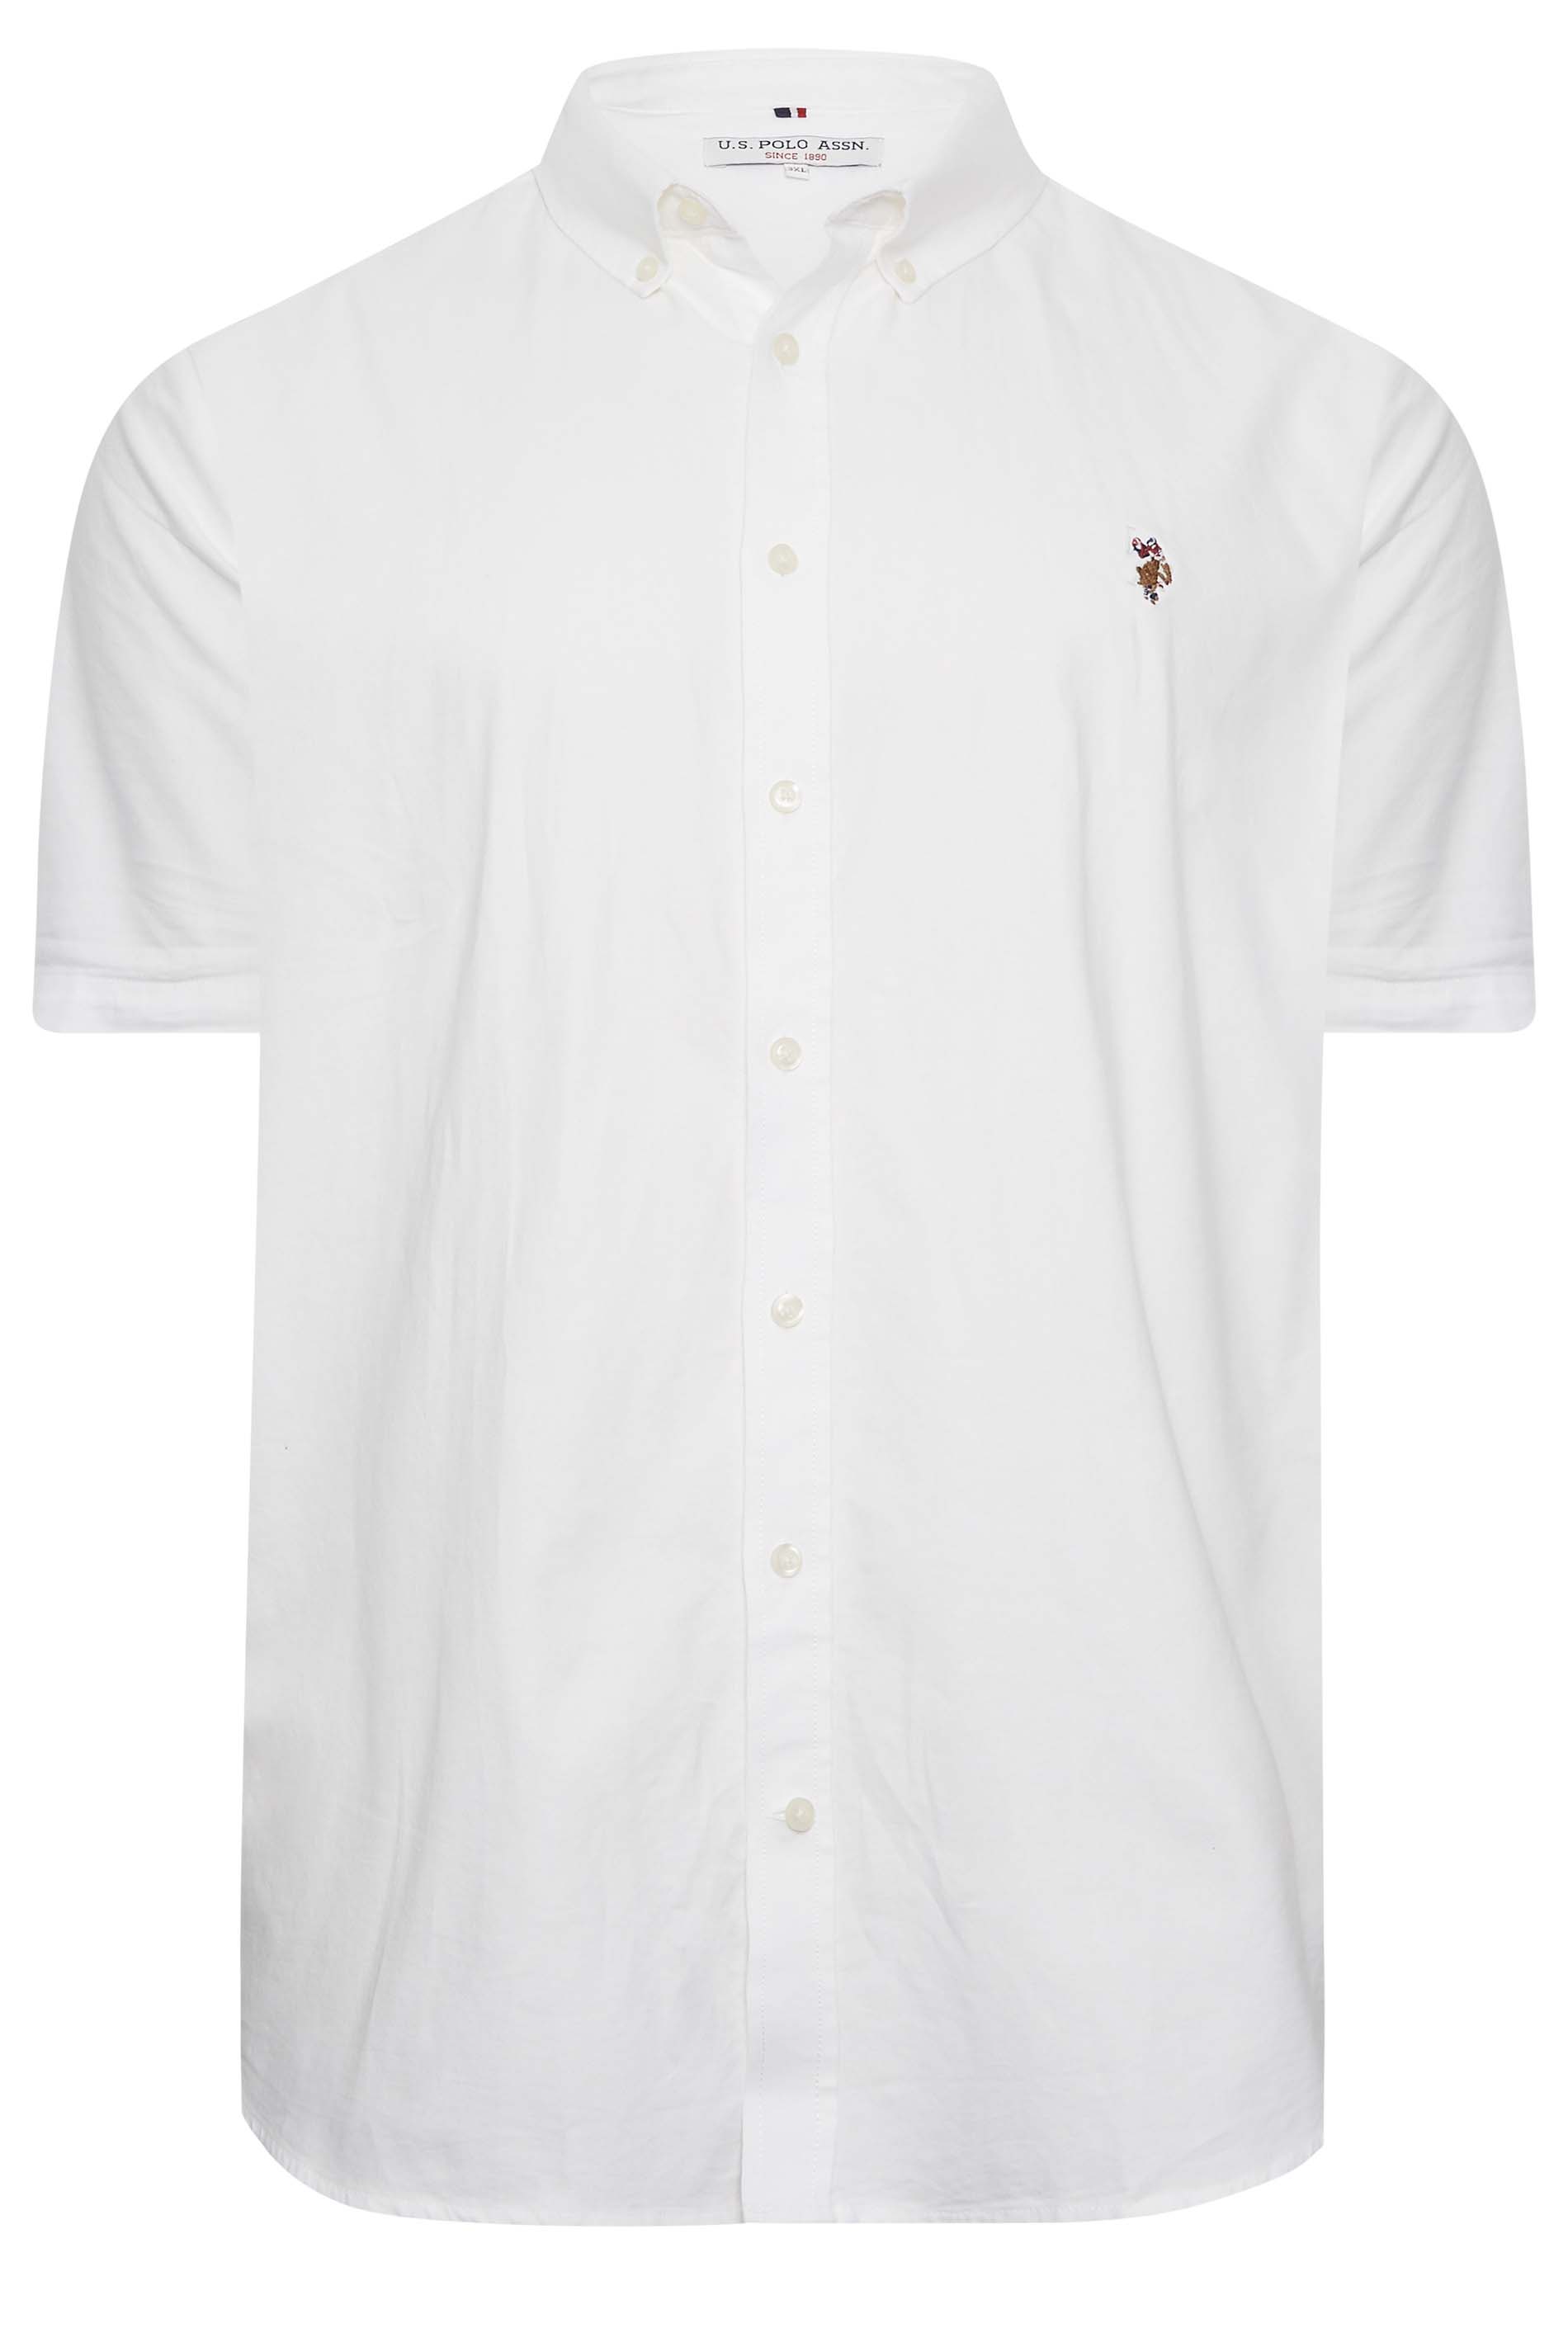 U.S. POLO ASSN. Big & Tall White Short Sleeve Shirt | BadRhino  3